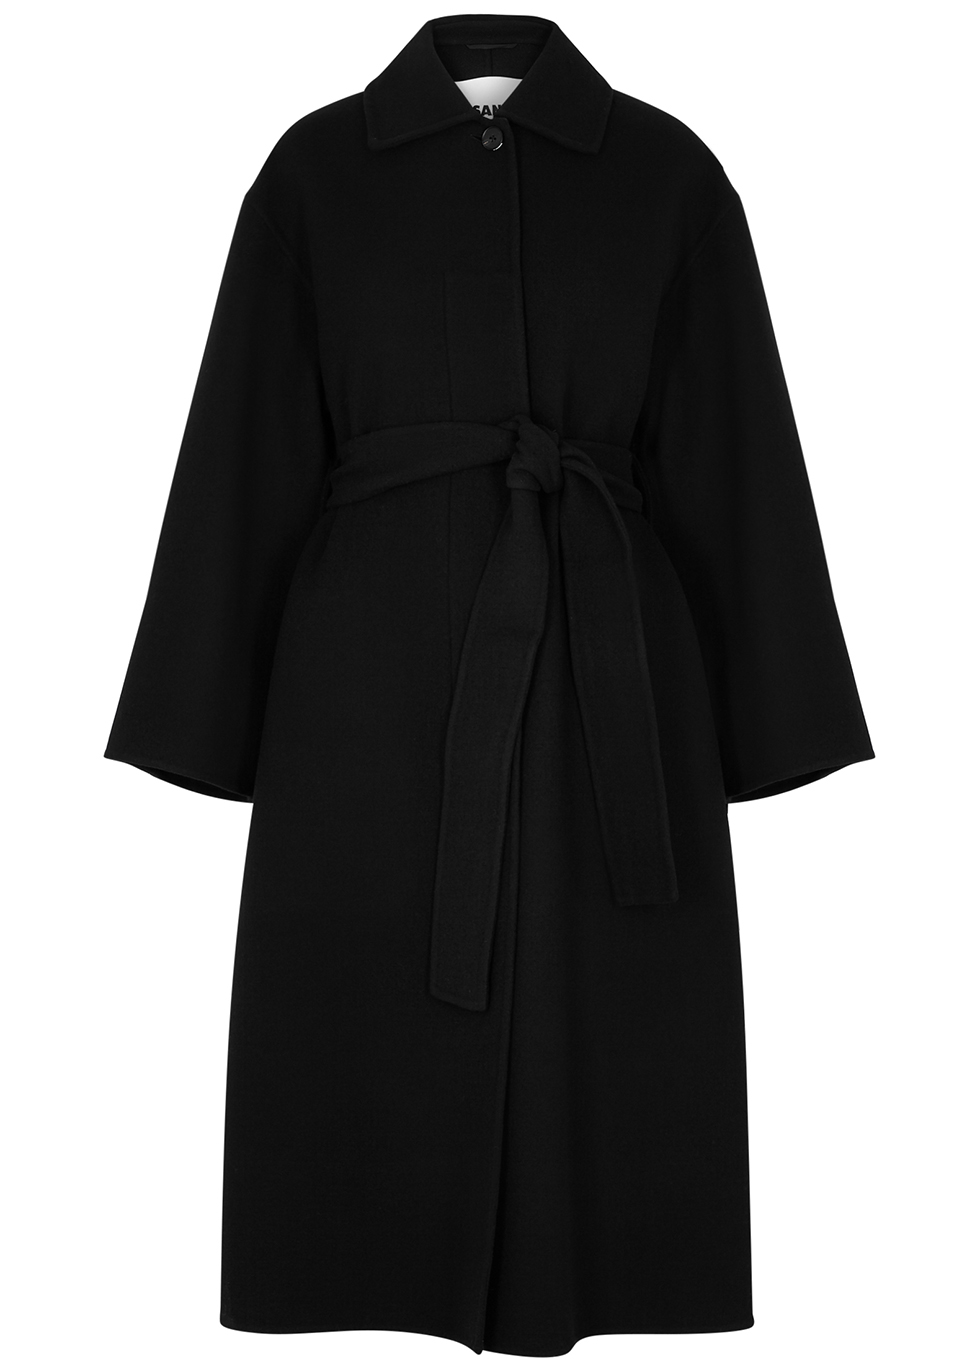 Black belted wool coat